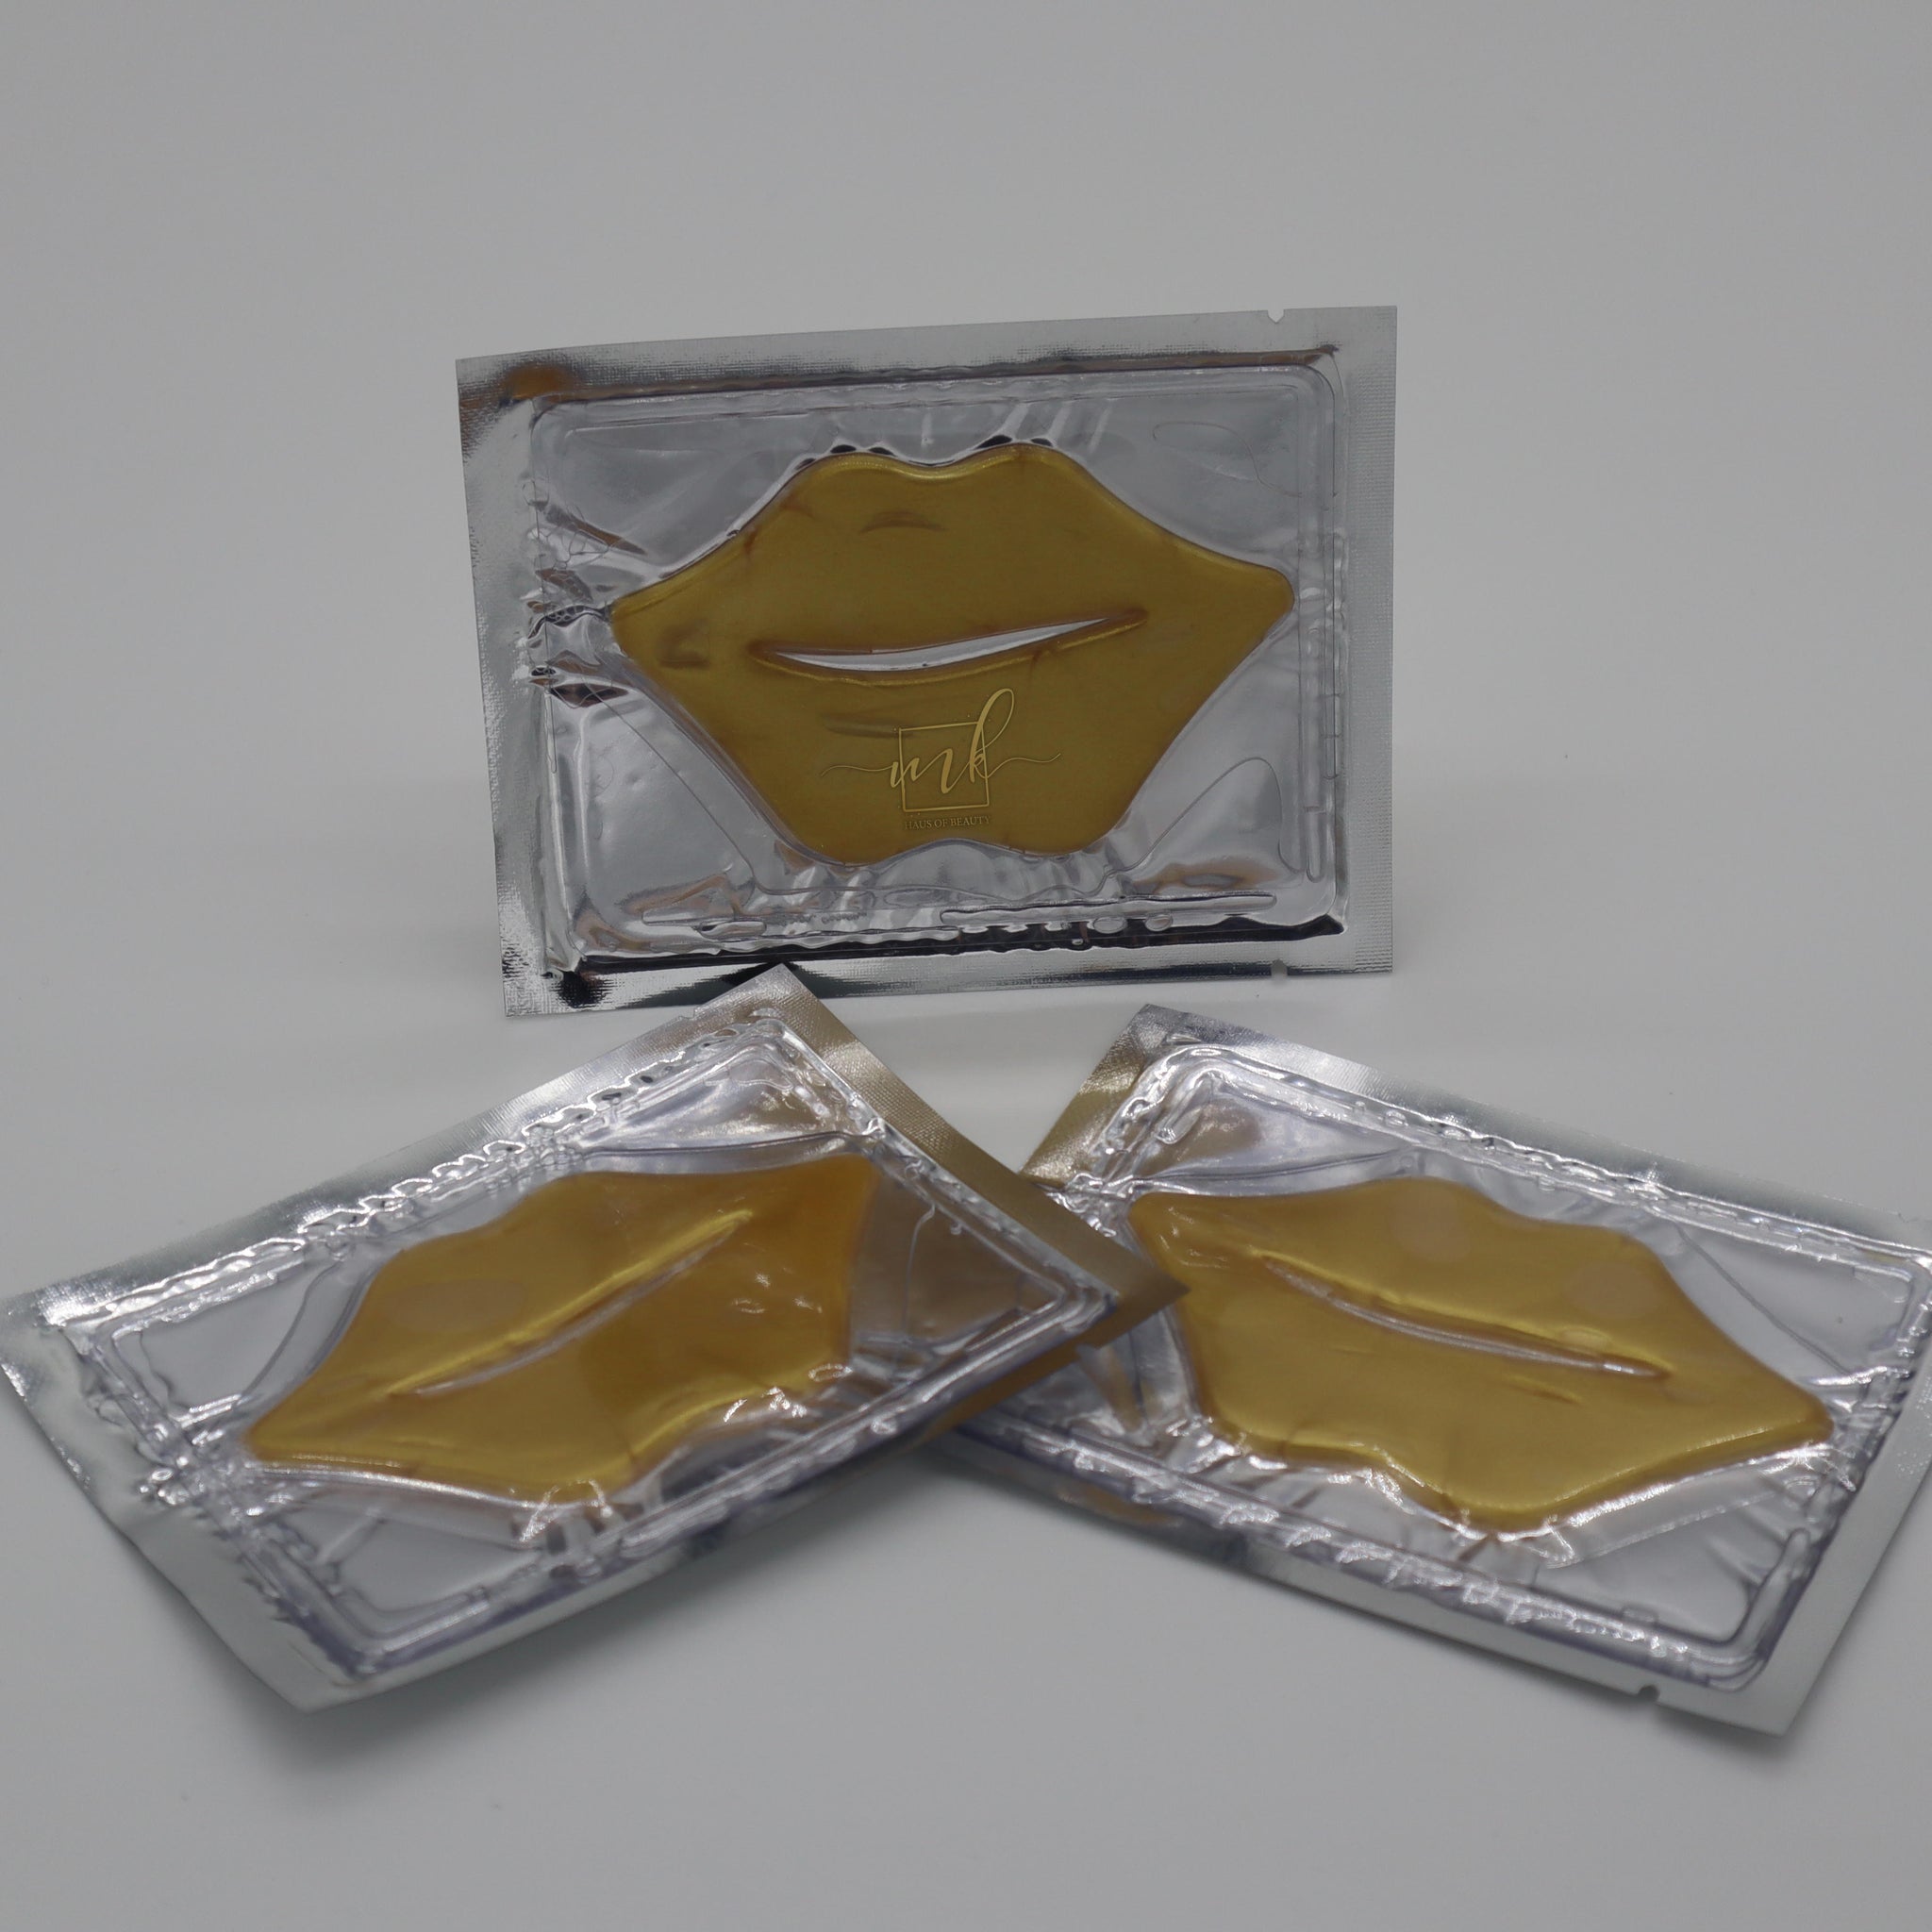 MK 24k Gold Lip Mask